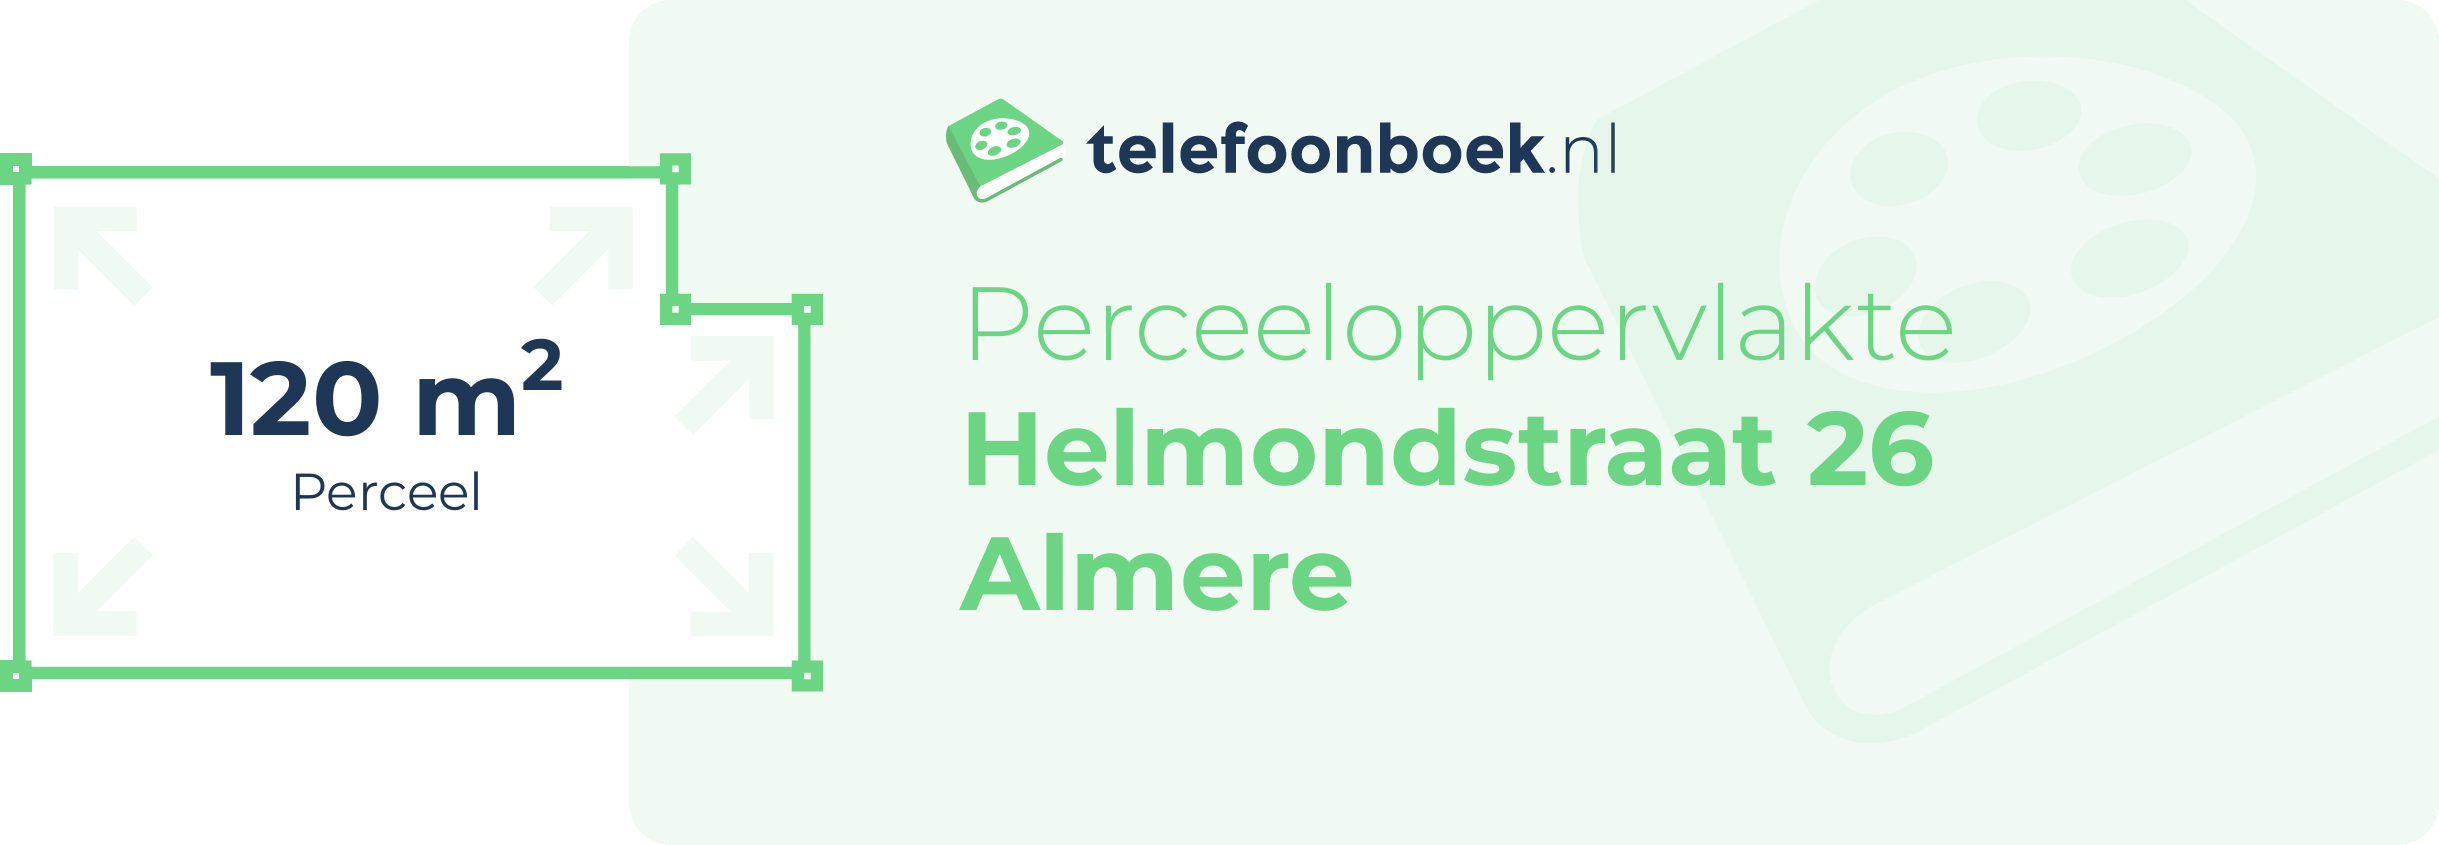 Perceeloppervlakte Helmondstraat 26 Almere